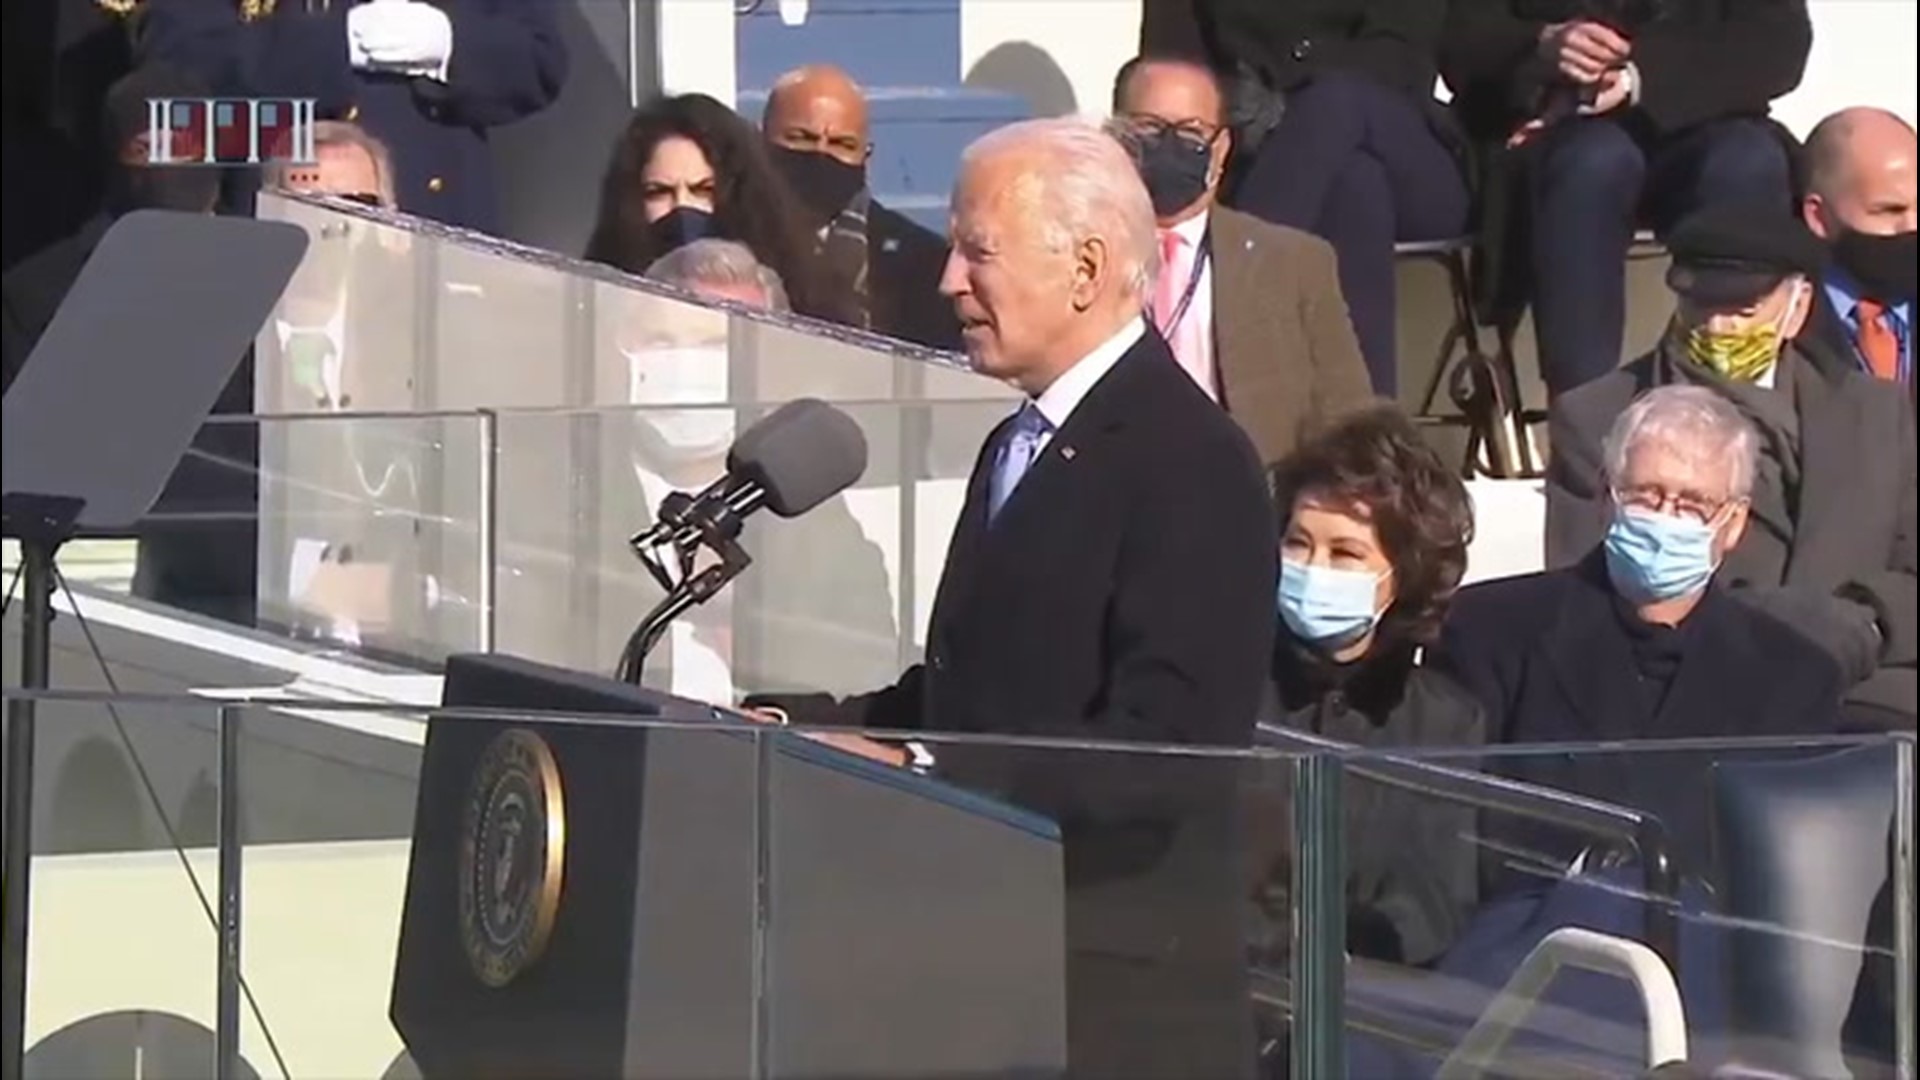 Joe Biden was sworn in as the 46th President of the United States of America on a frigid Jan. 20 in Washington, D.C.